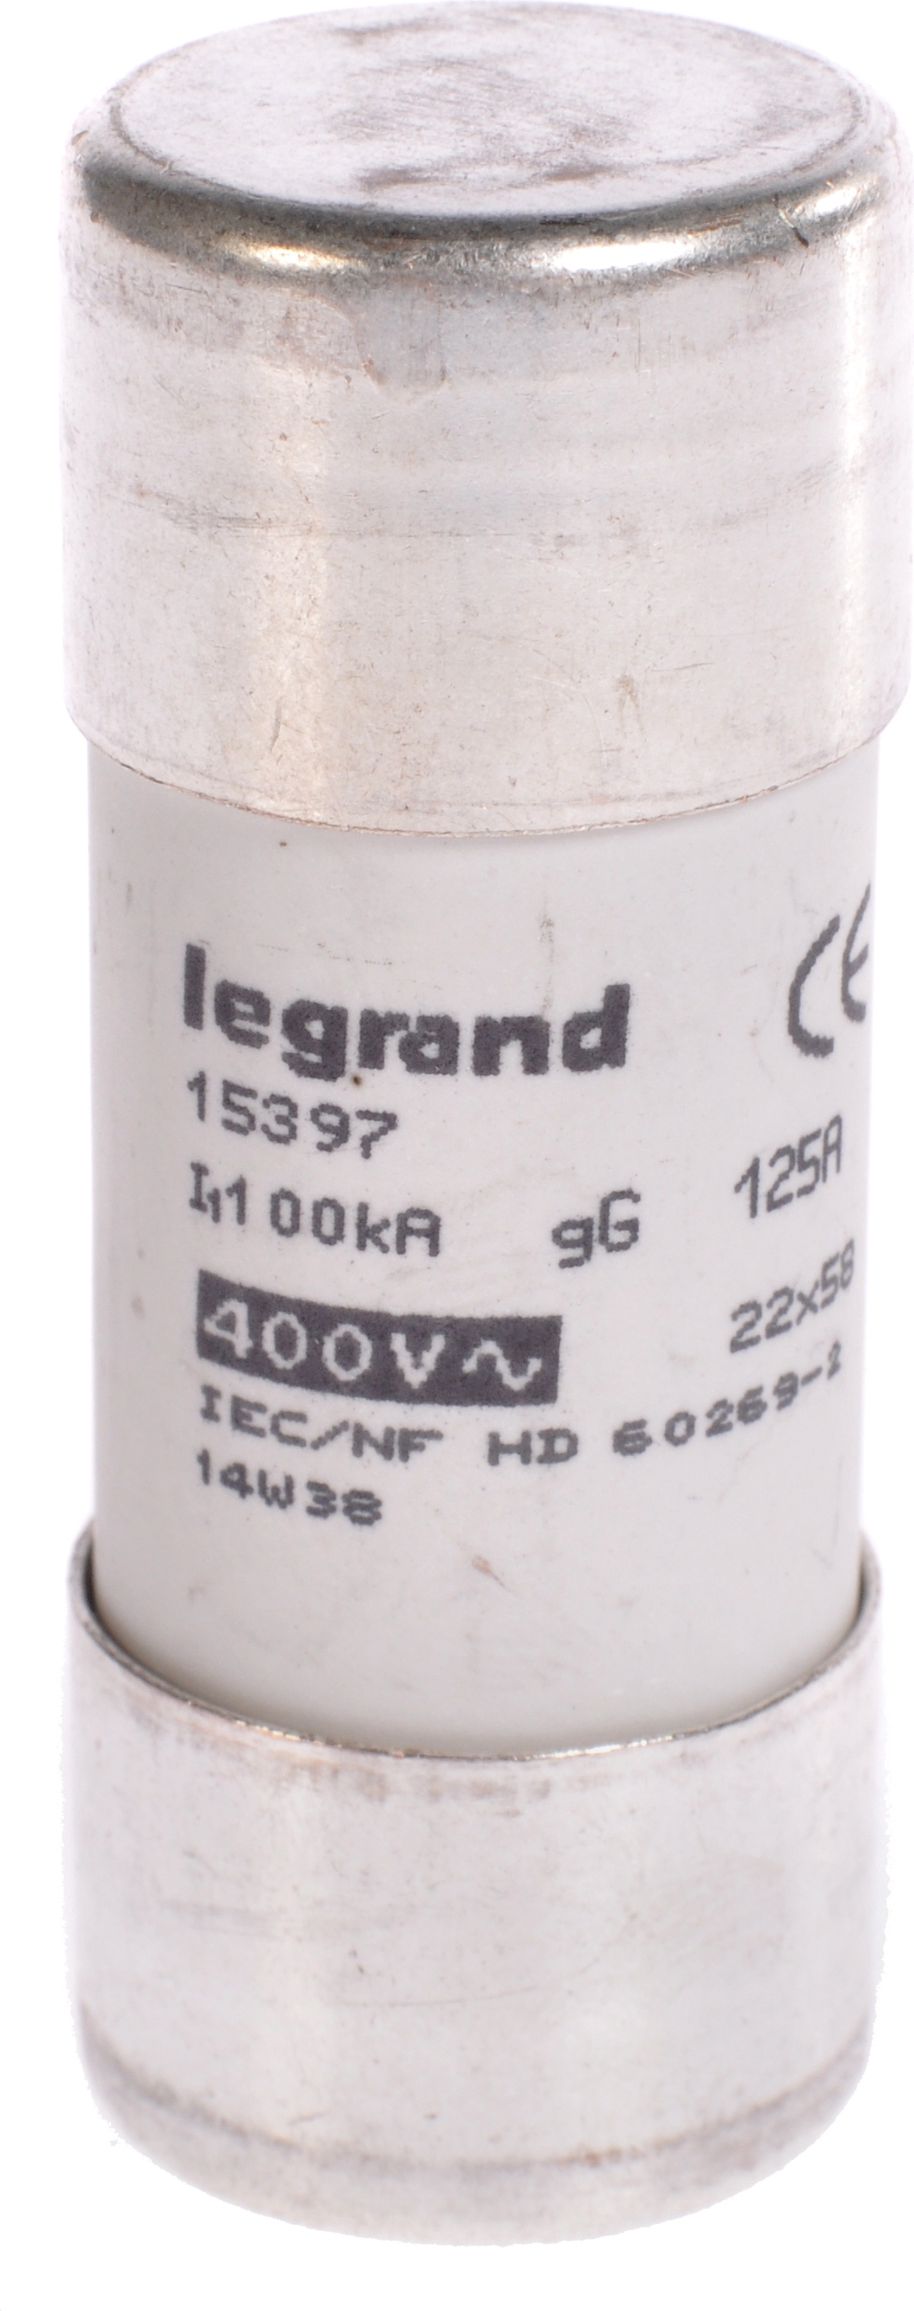 Siguranțe cilindrice 125A gL 500V HPC 22 x 58mm (015397)